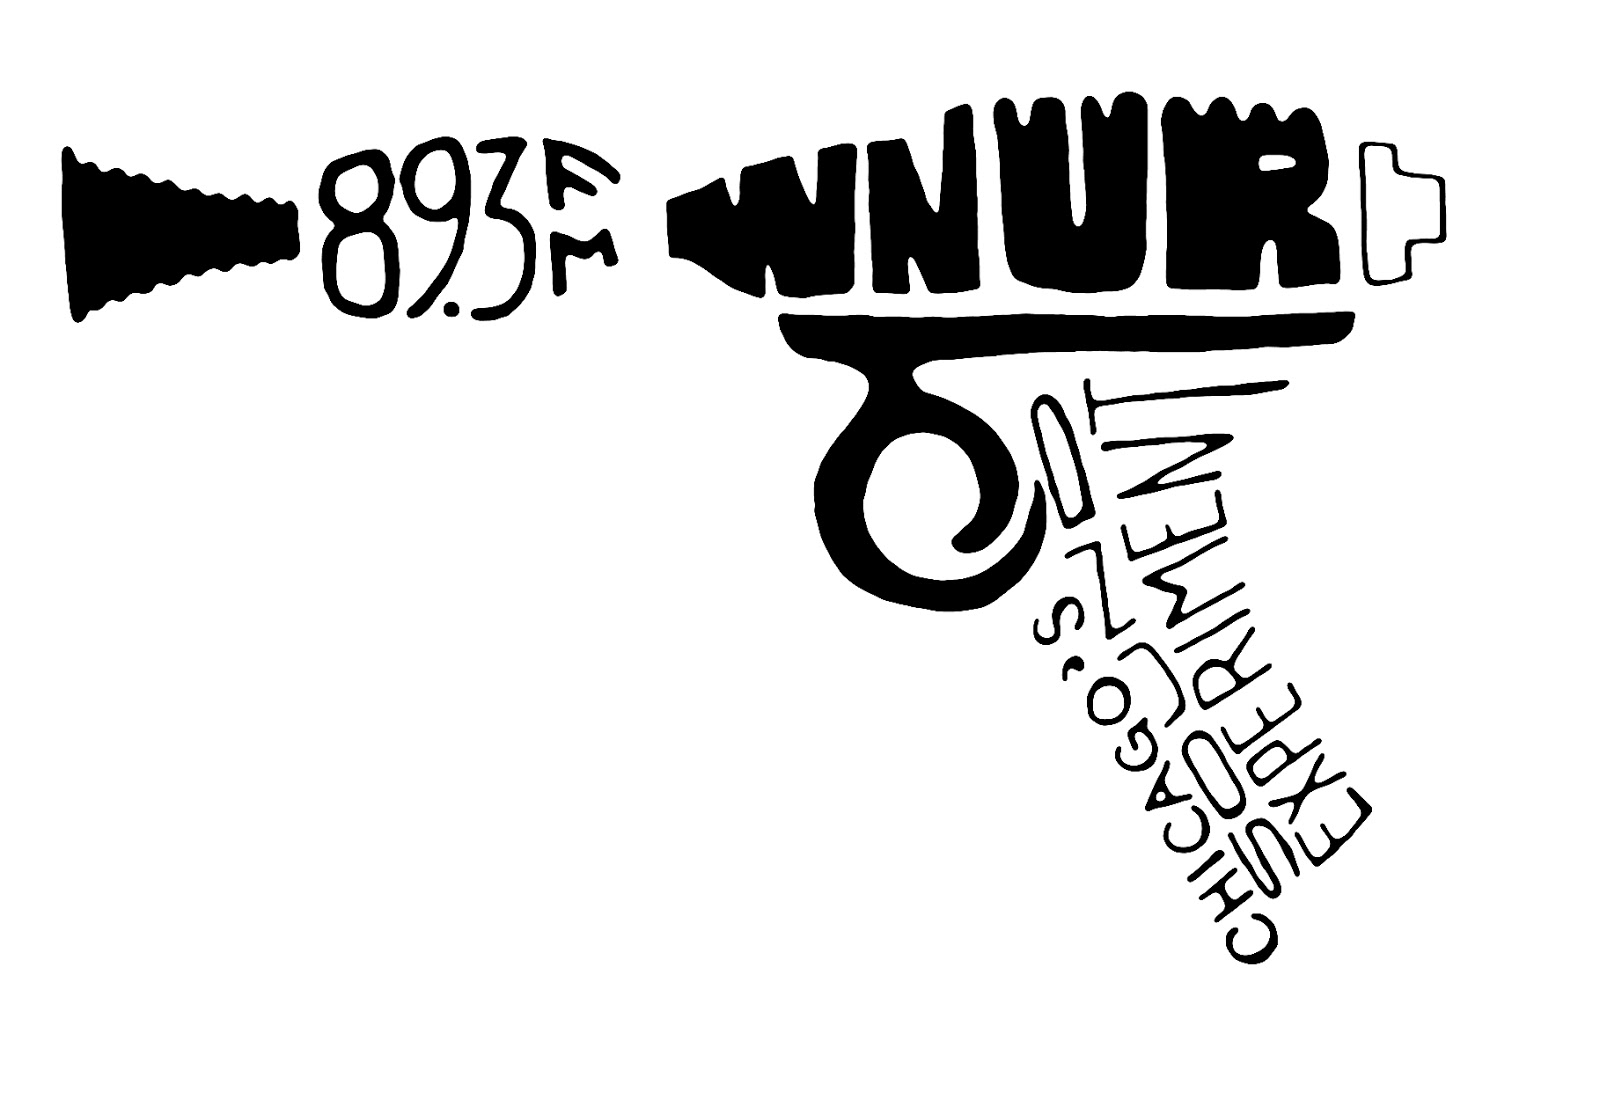 WNUR 89.3 FM- Northwestern University